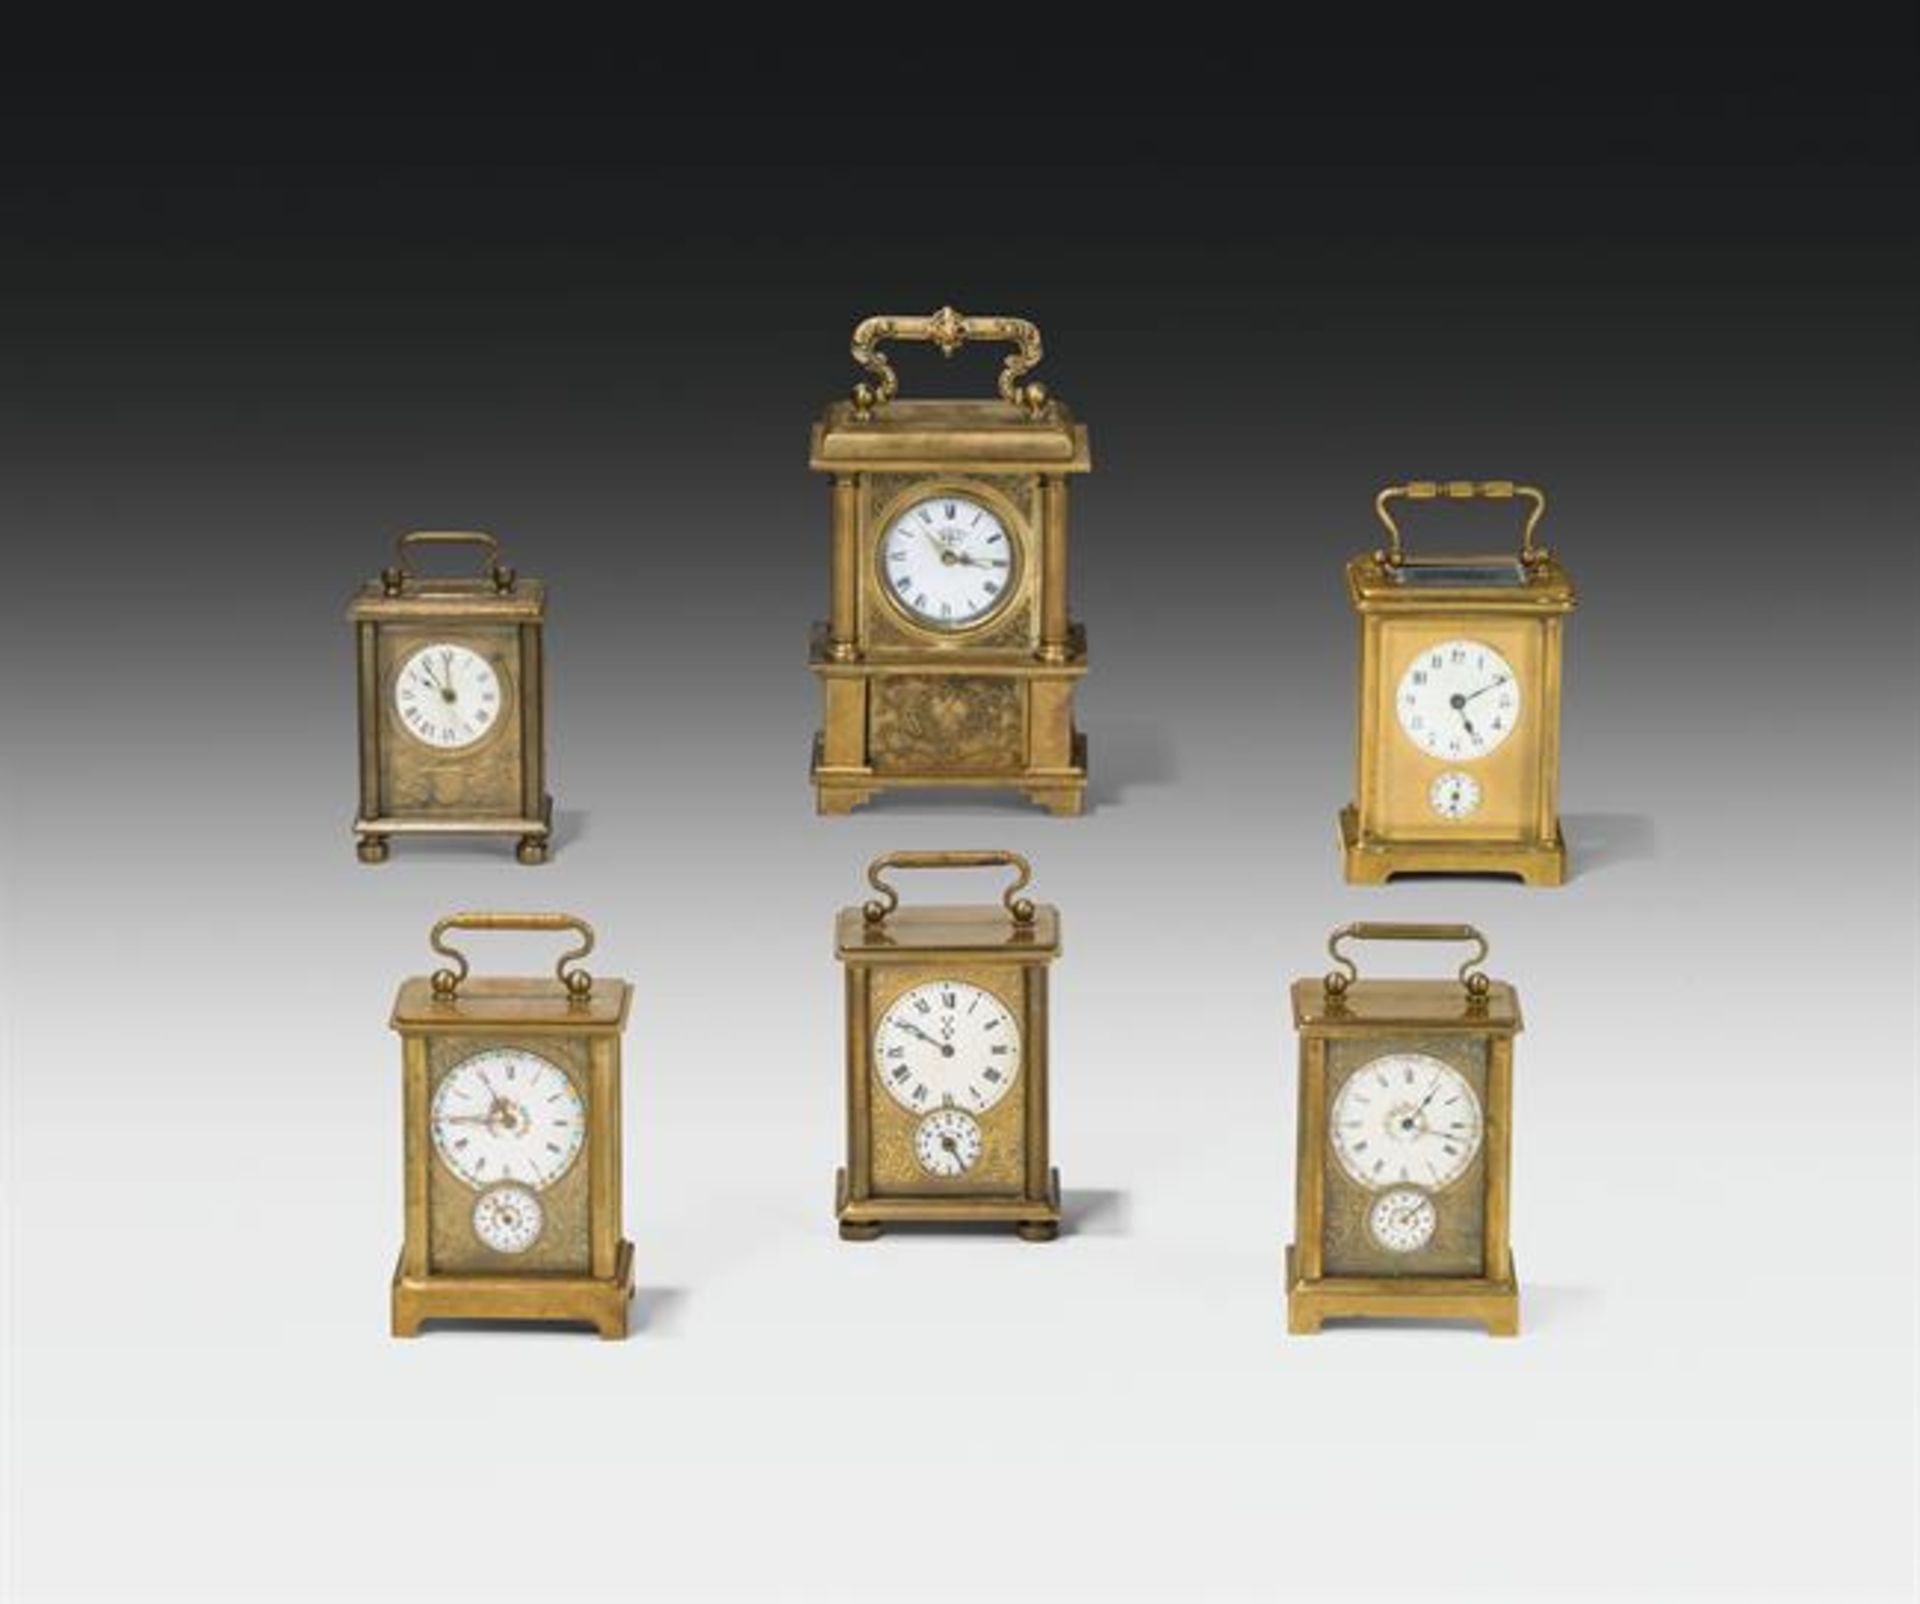 6 Carriage clocks